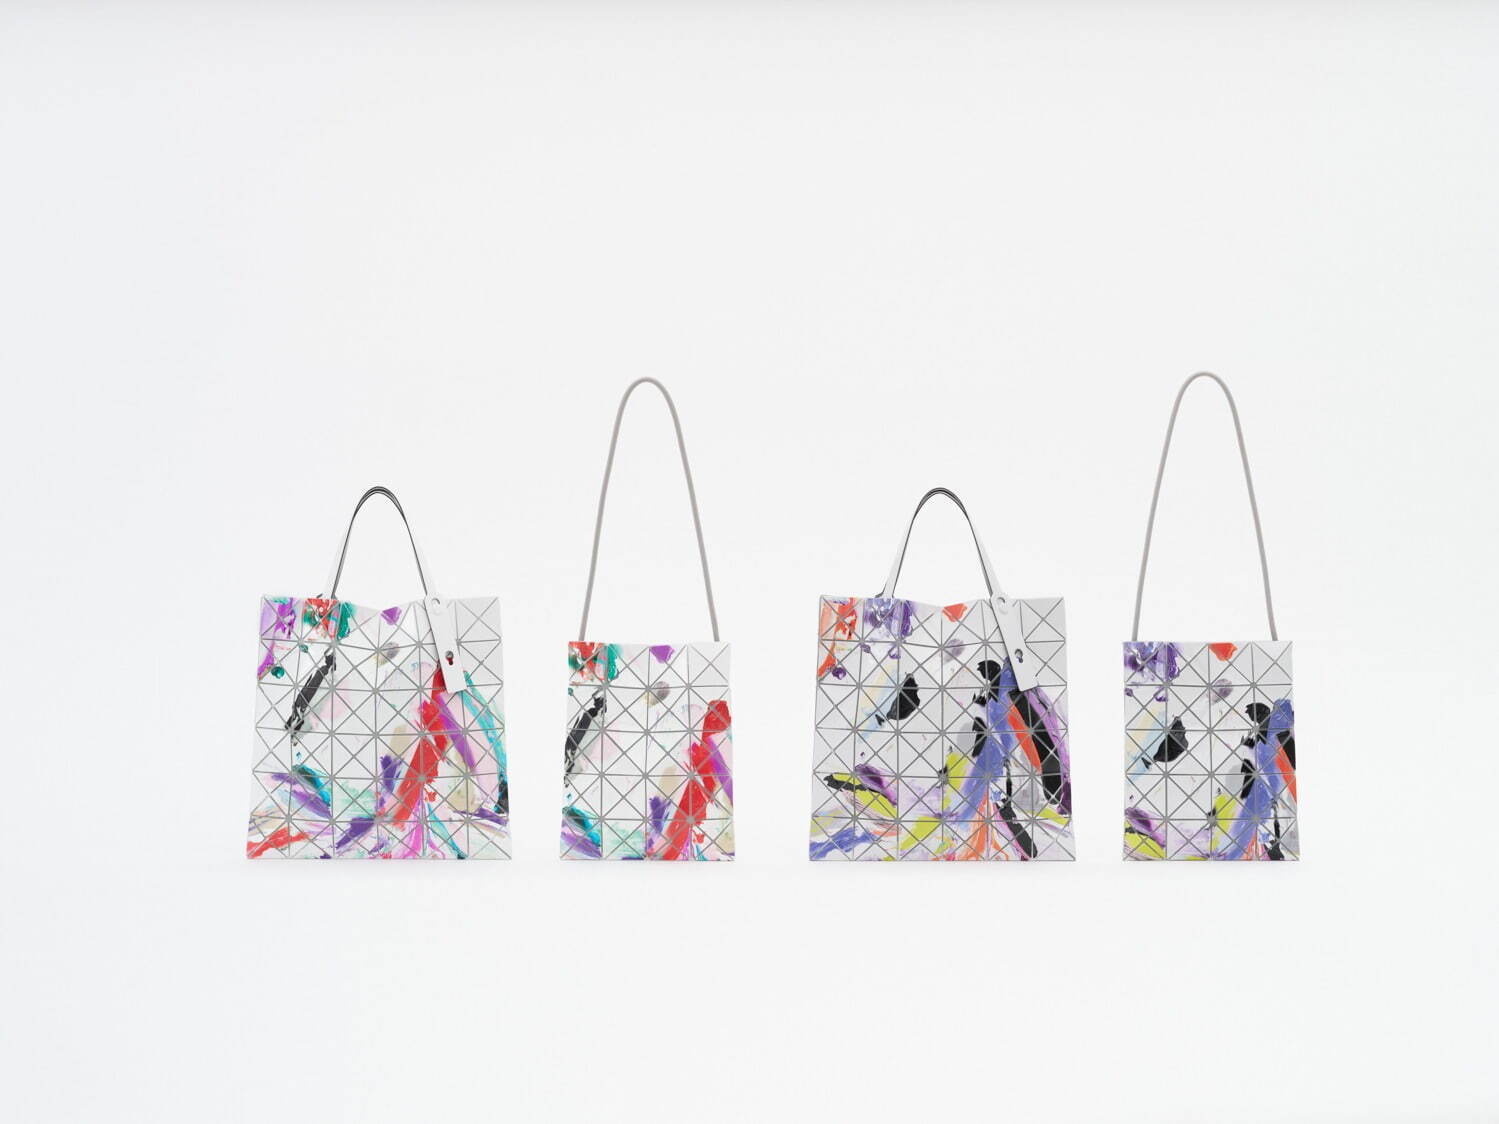 「PALETTE」
Tote bag(H340×W340) 各71,500円
Shoulder Bag(H280 x W230) 各60,500円